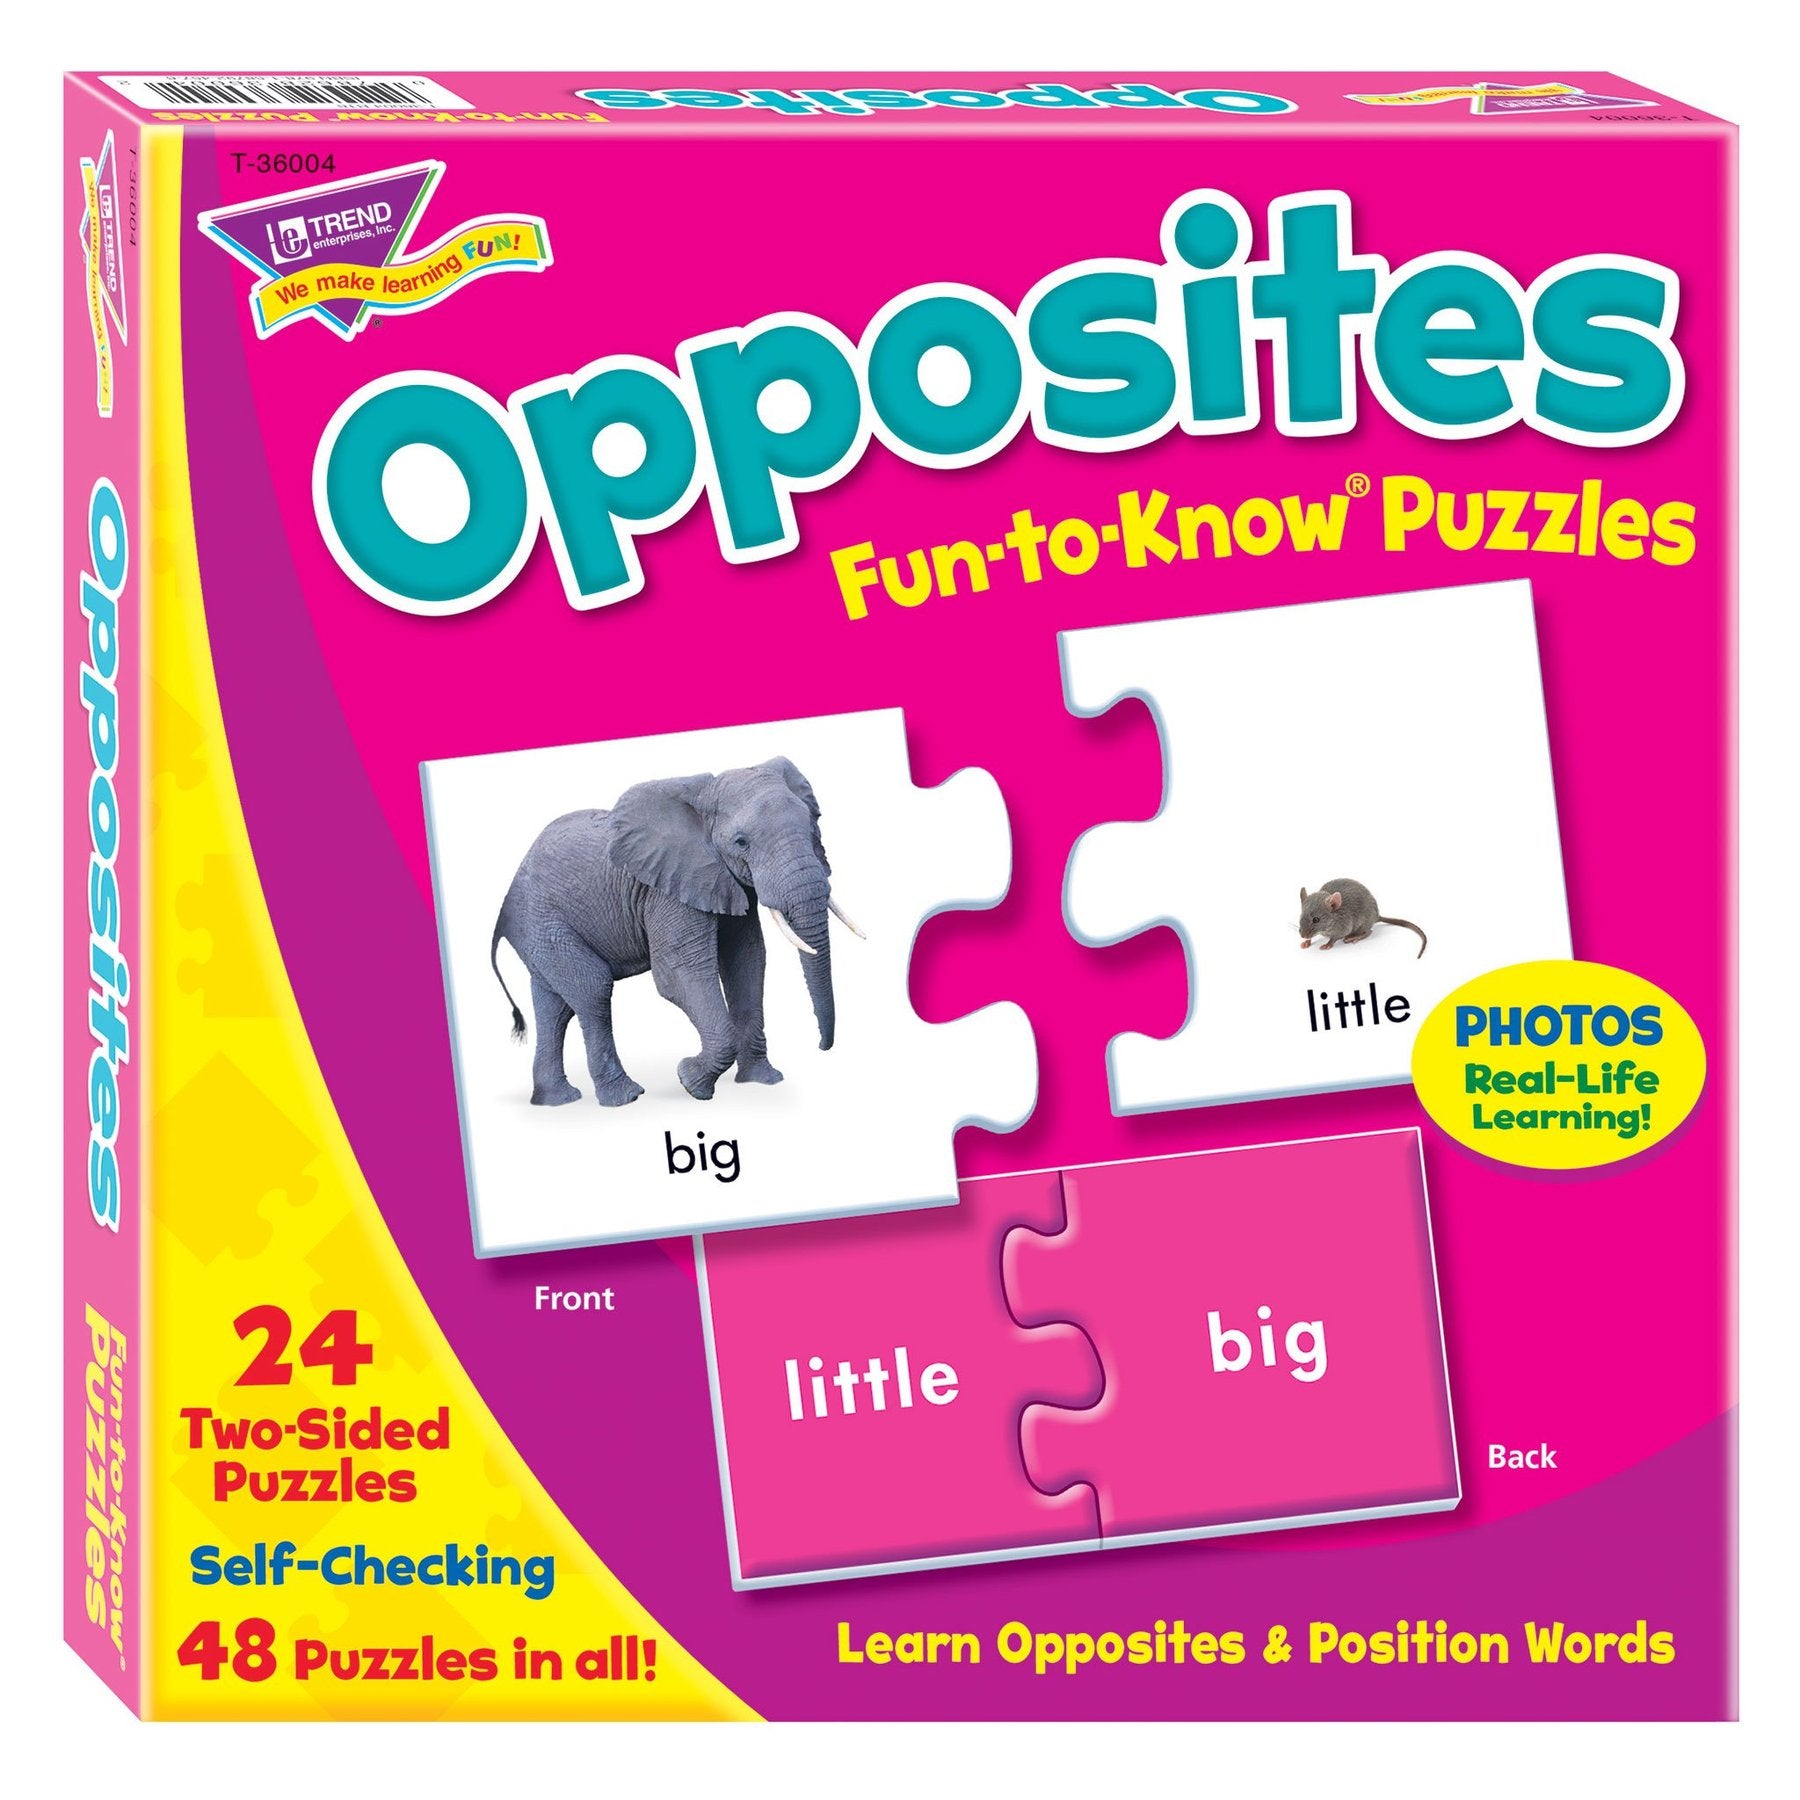 Opposites Fun-to-Know® Puzzles